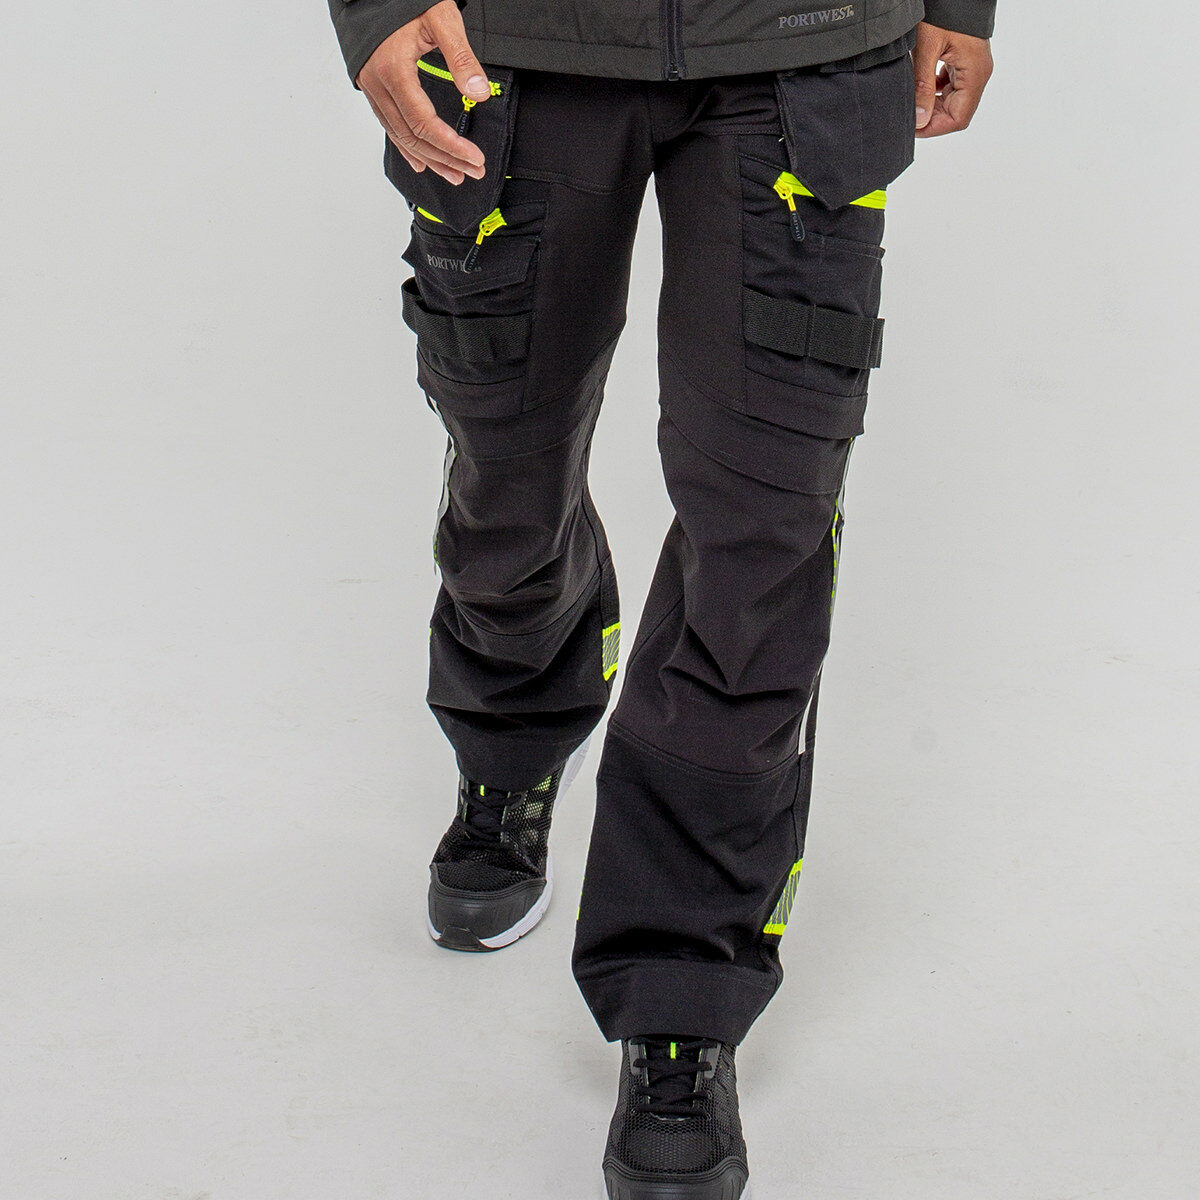 DX440 Detachable holster pocket trouser (DX440) slim fit